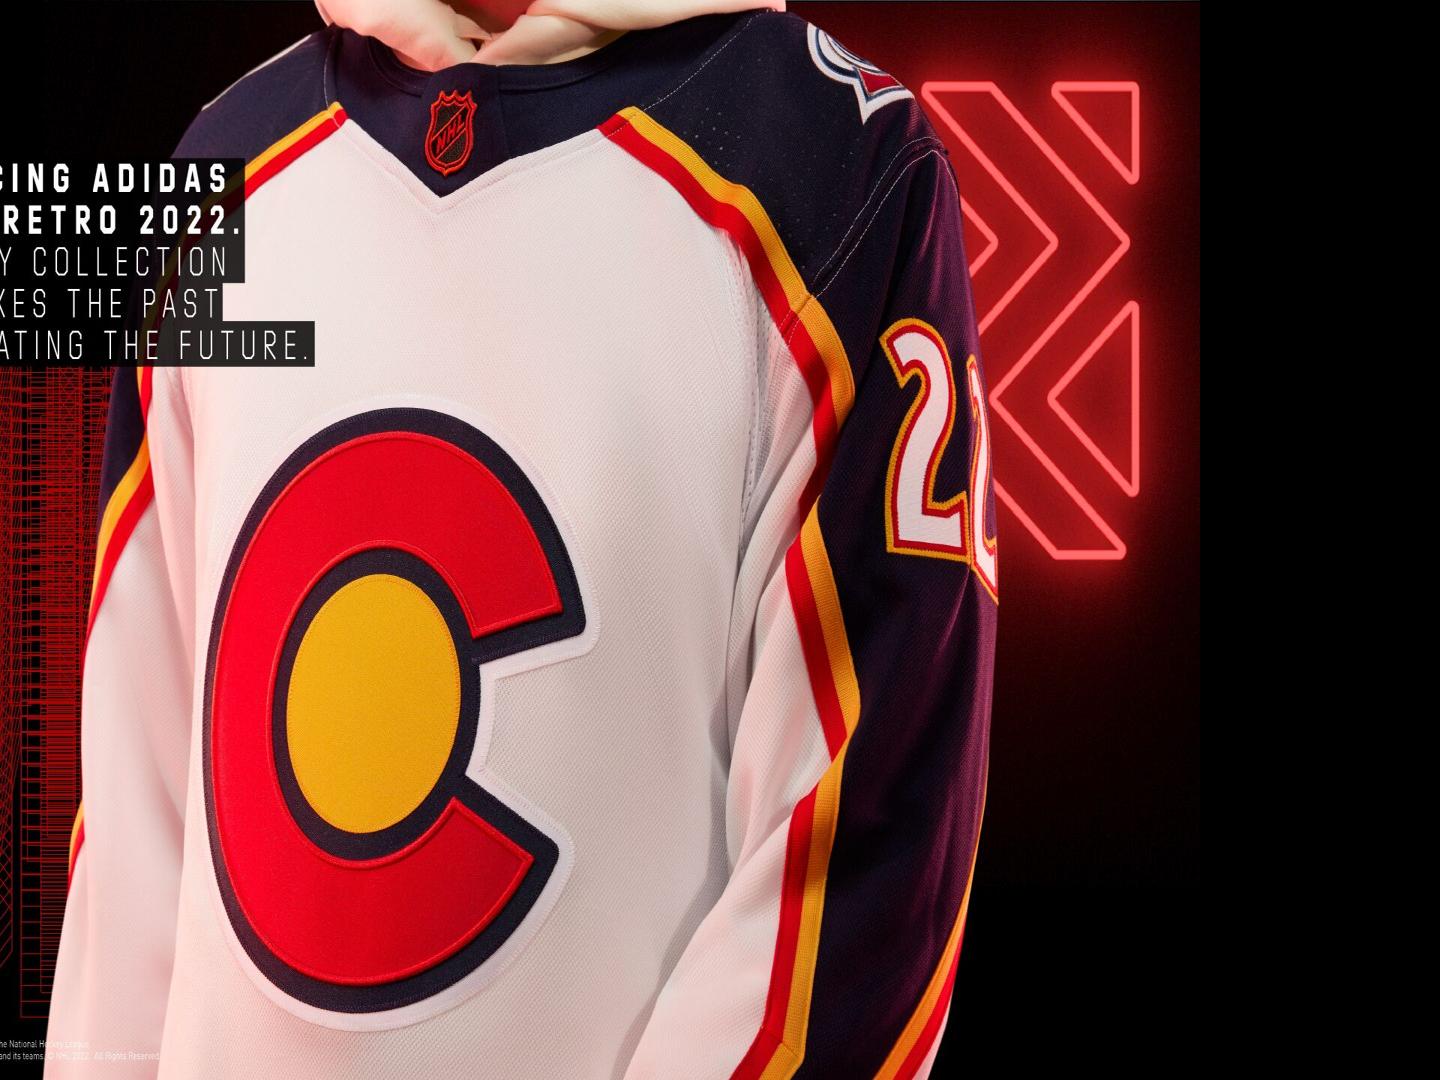 Flyers unveil 'Reverse Retro' alternate jersey for upcoming season